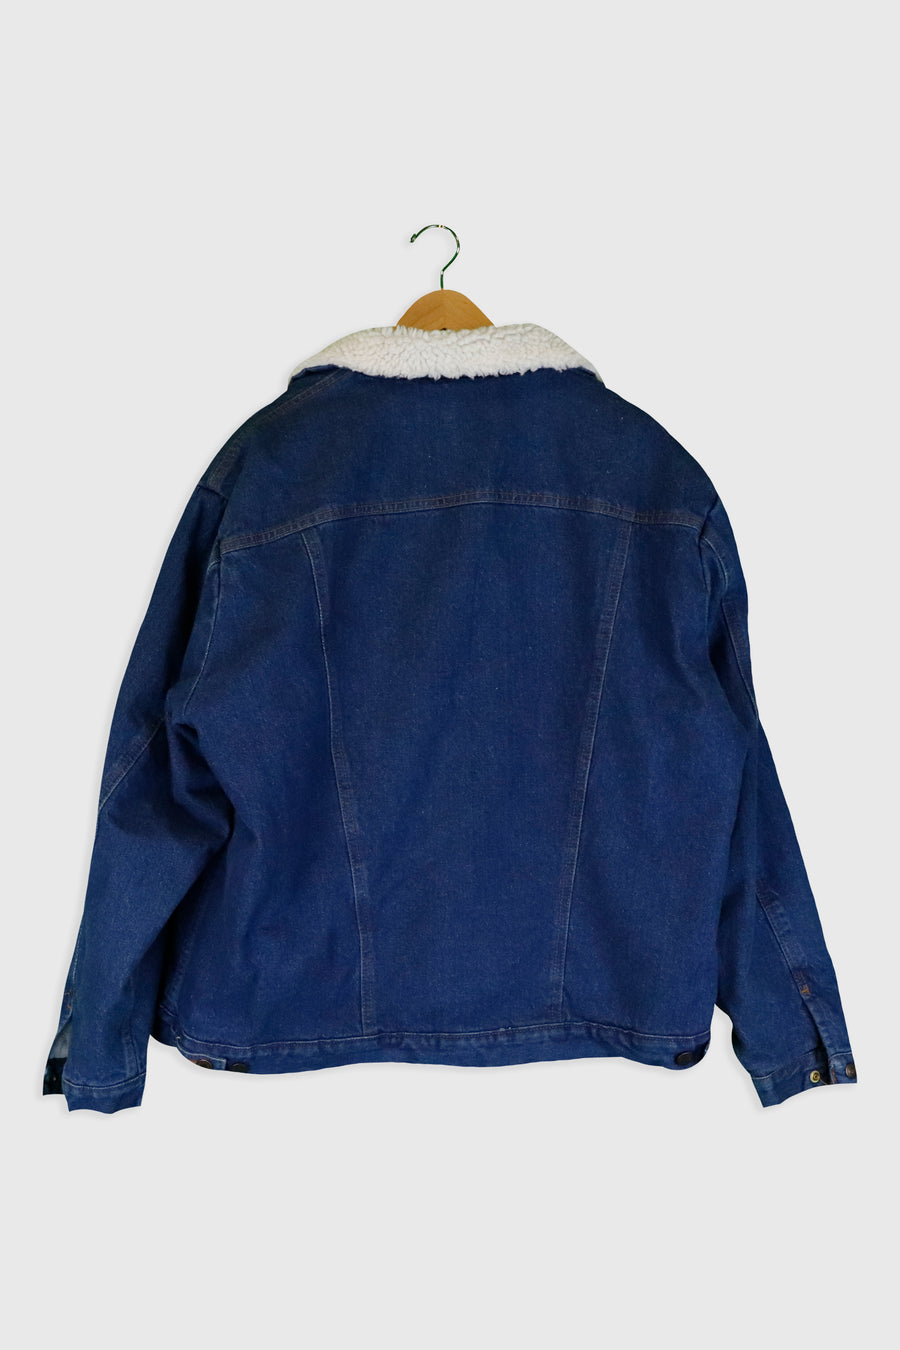 Vintage Wrangler Sherpa Authentic Western Jacket Sz XL